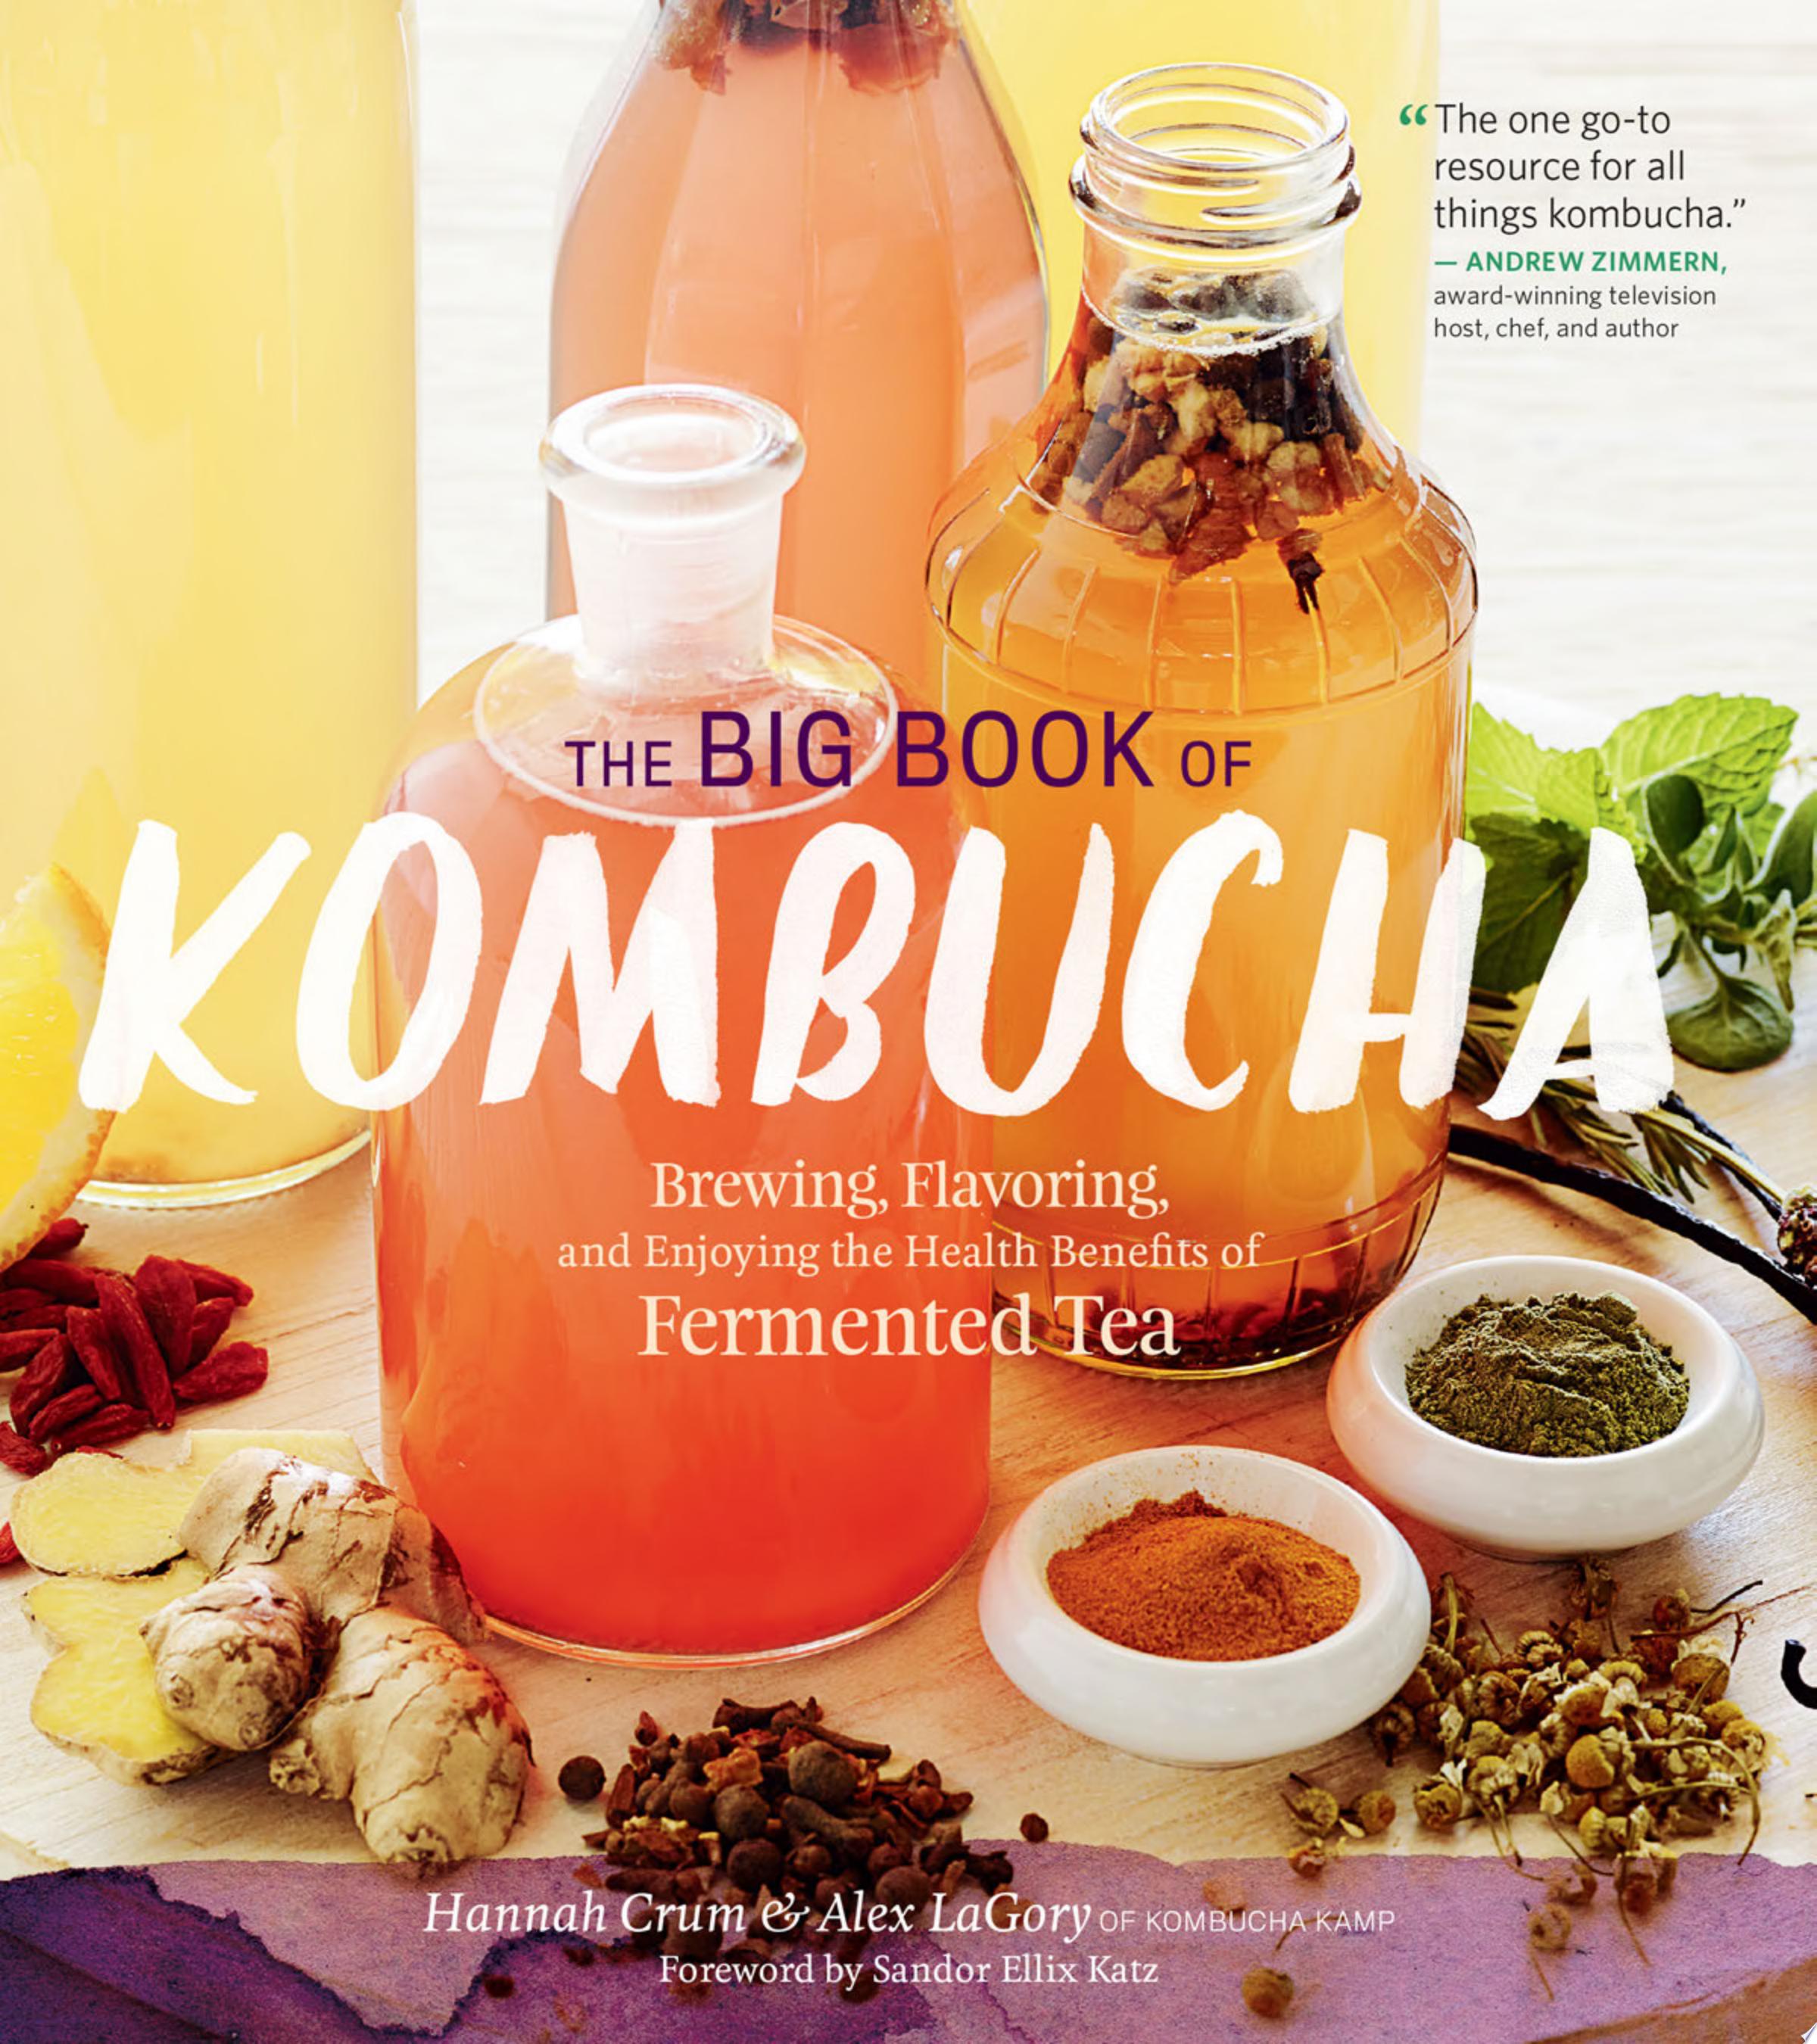 Image for "The Big Book of Kombucha"